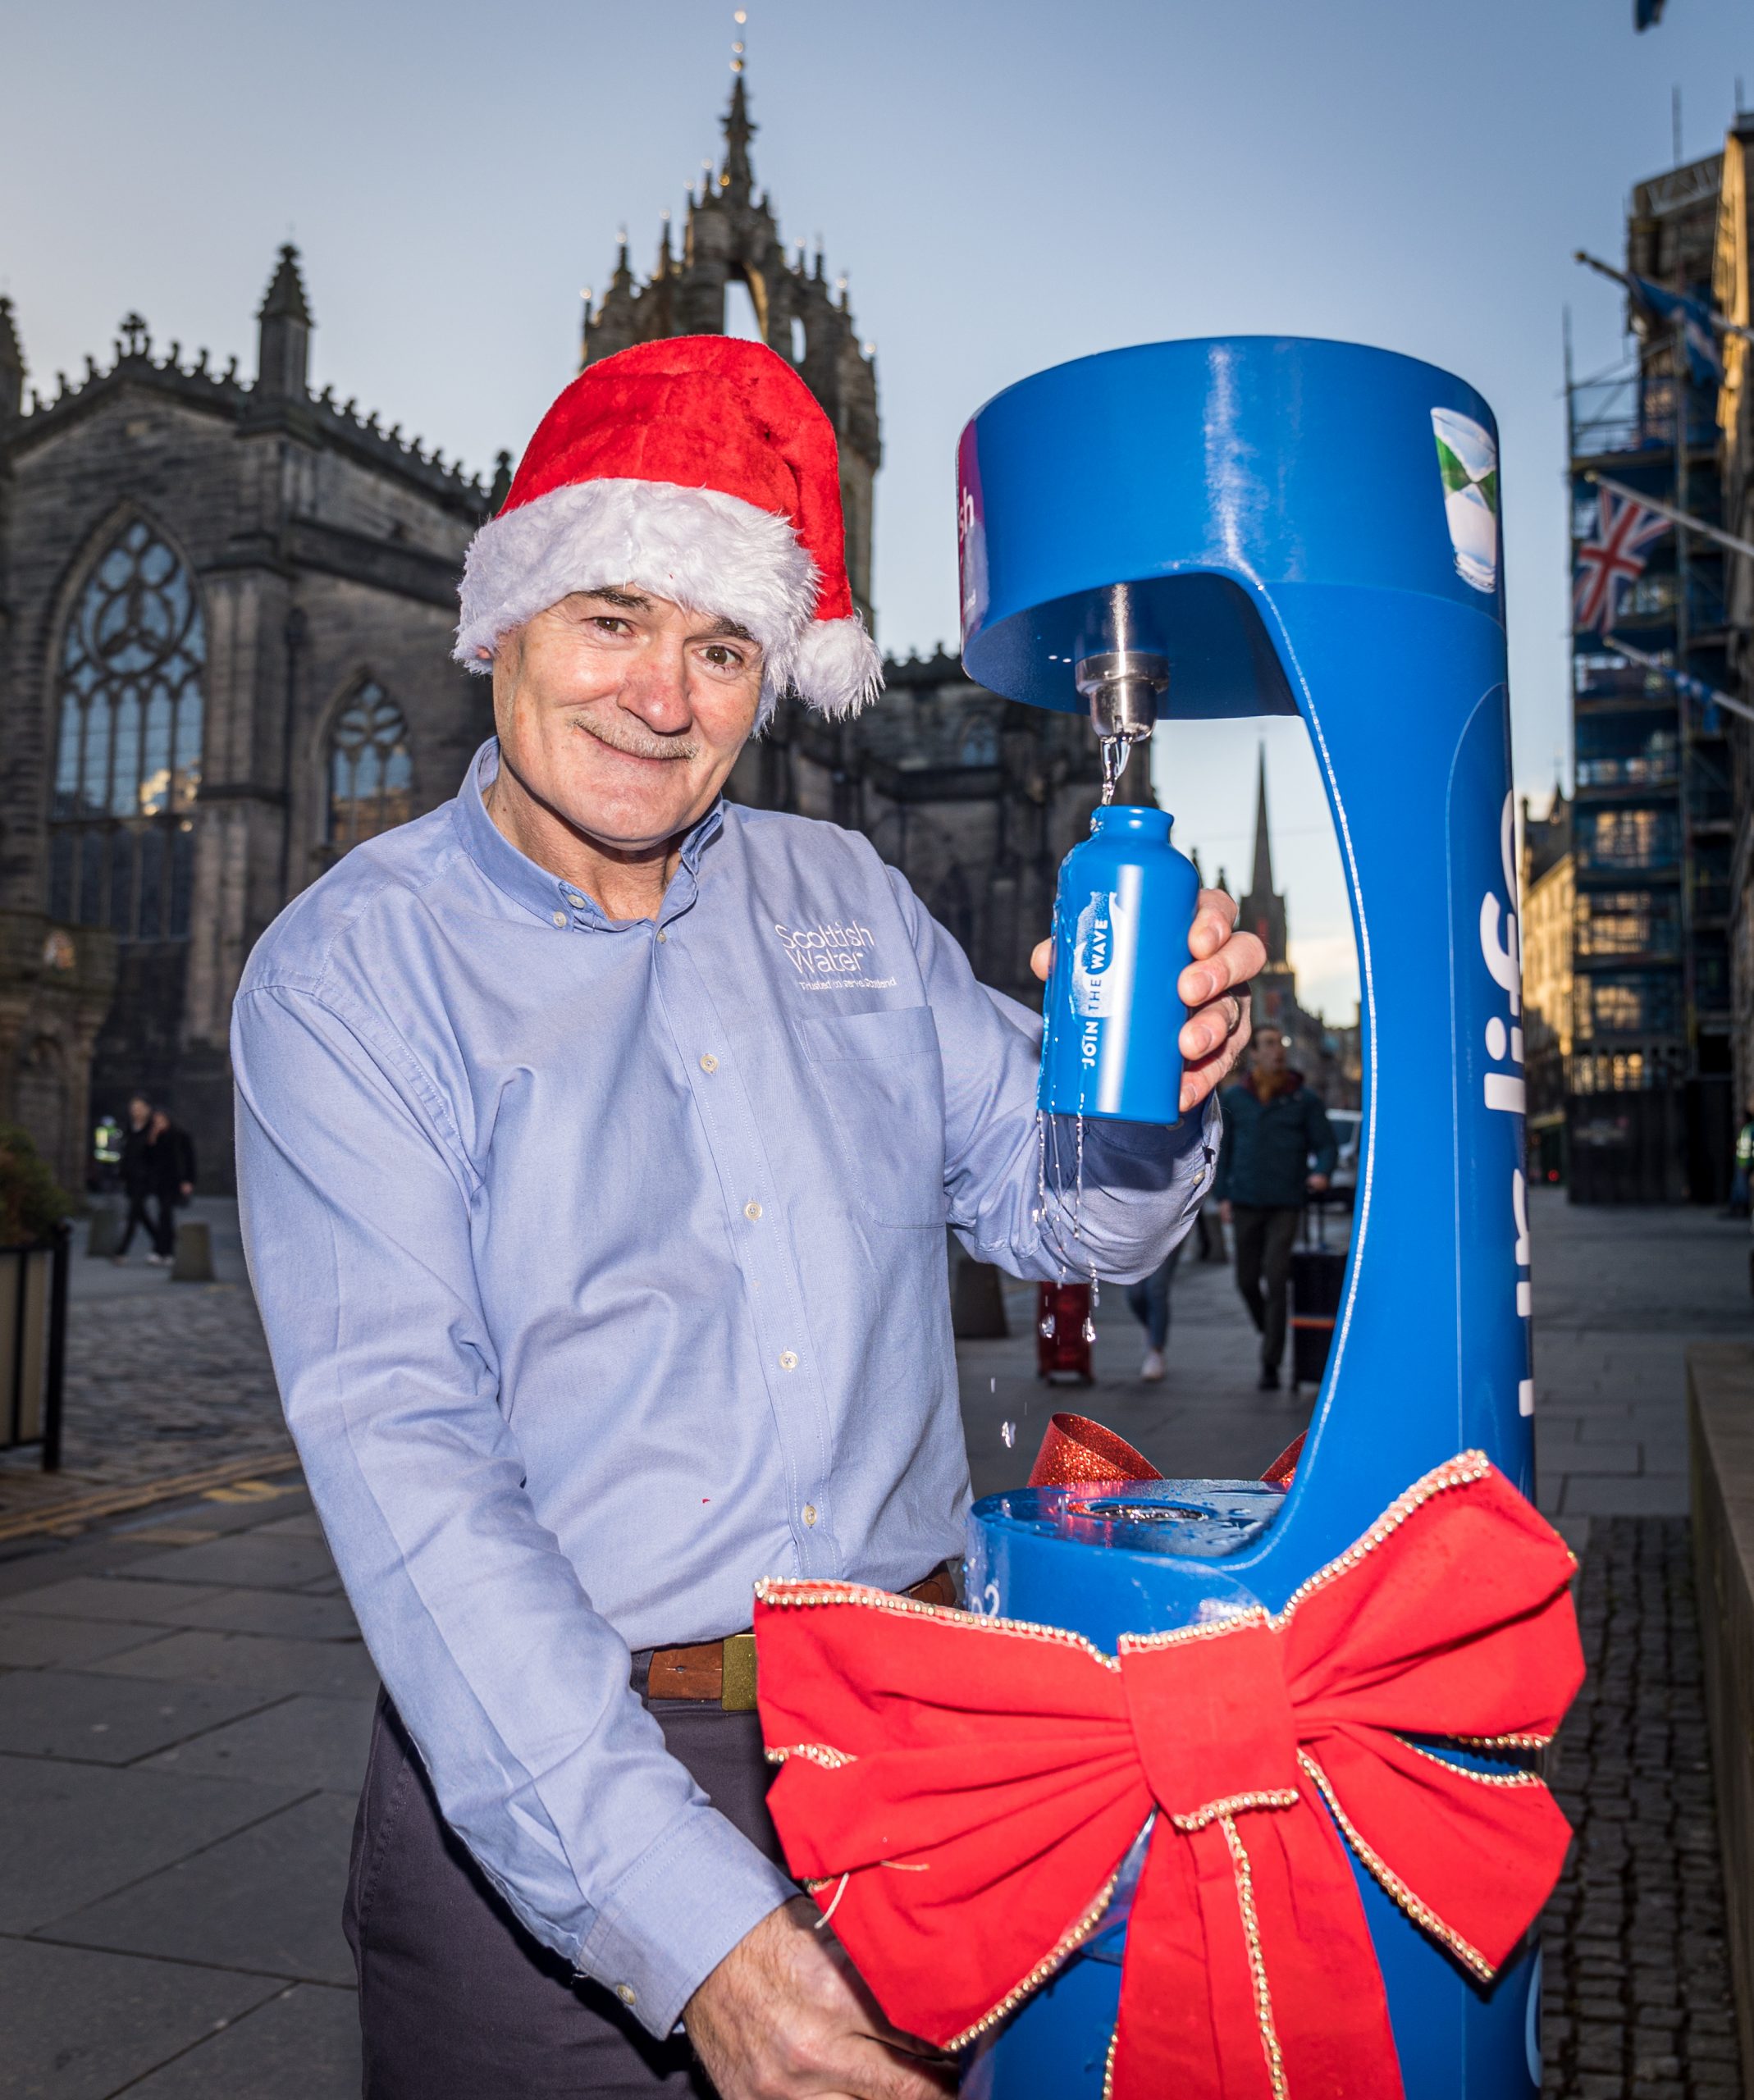 City celebrates set of six top up taps this Christmas – as major plastic saving milestone reached